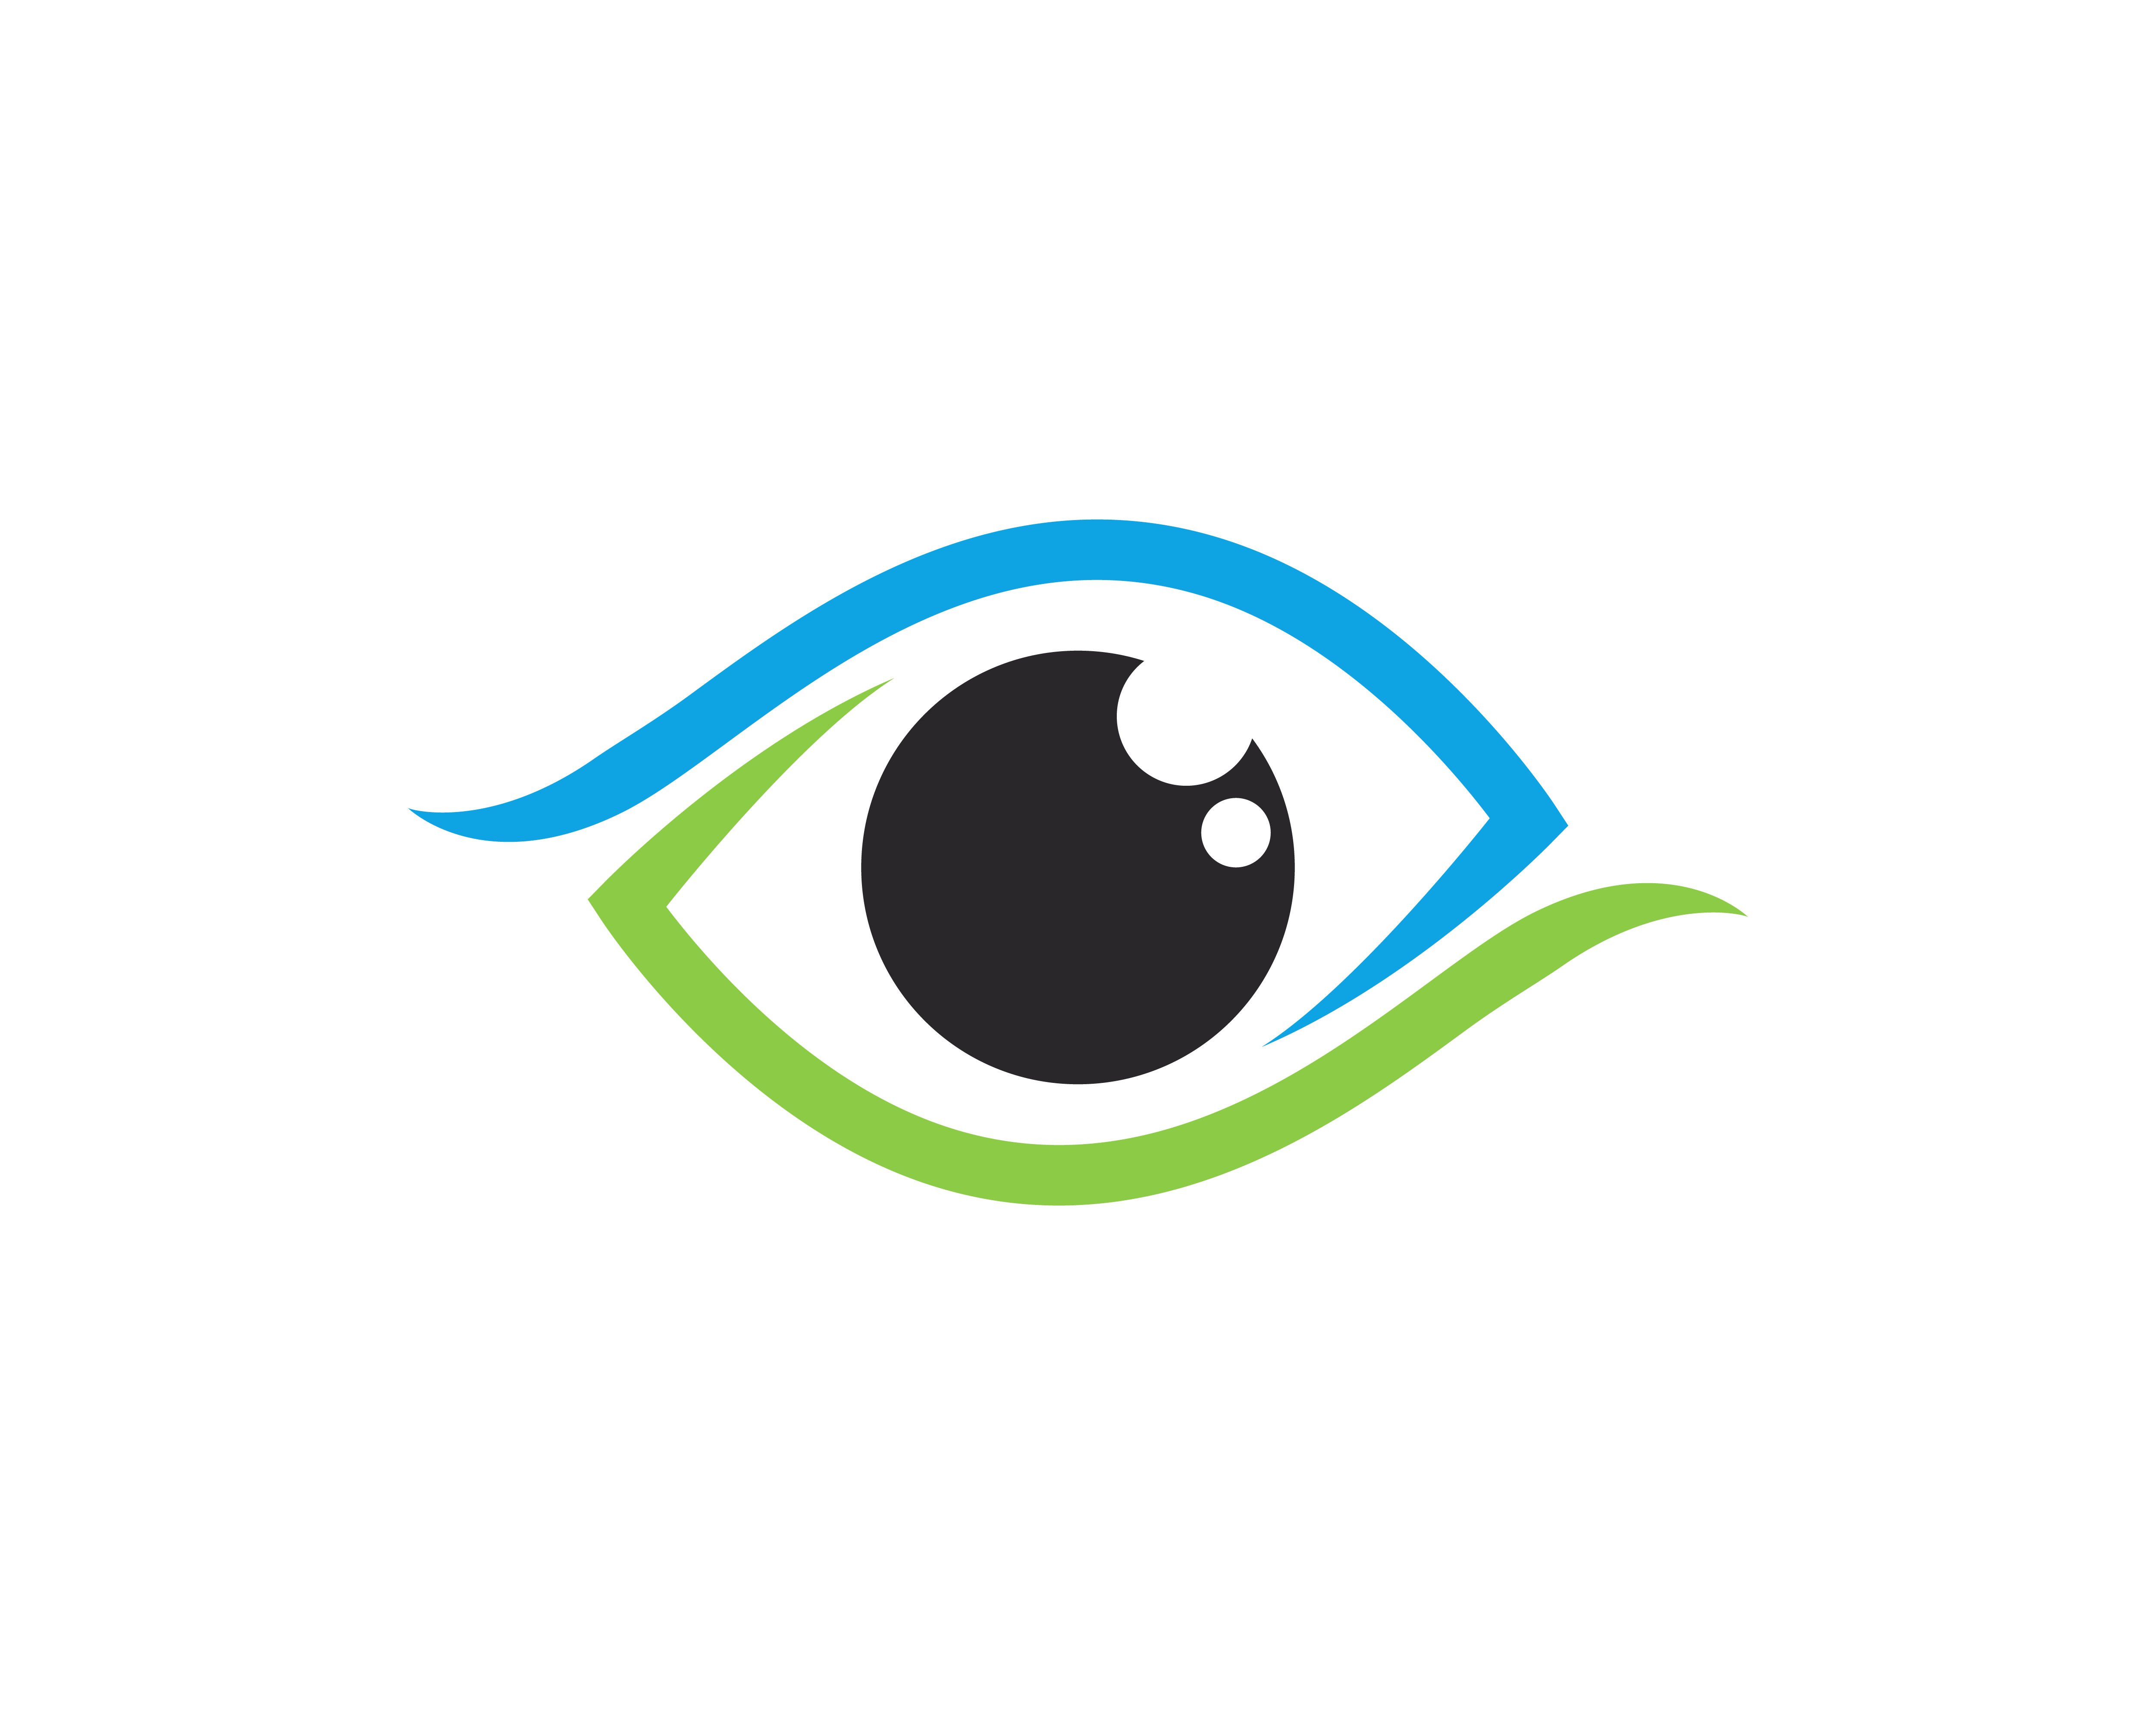 Eye logo vector 606951 - Download Free Vectors, Clipart Graphics & Vector Art